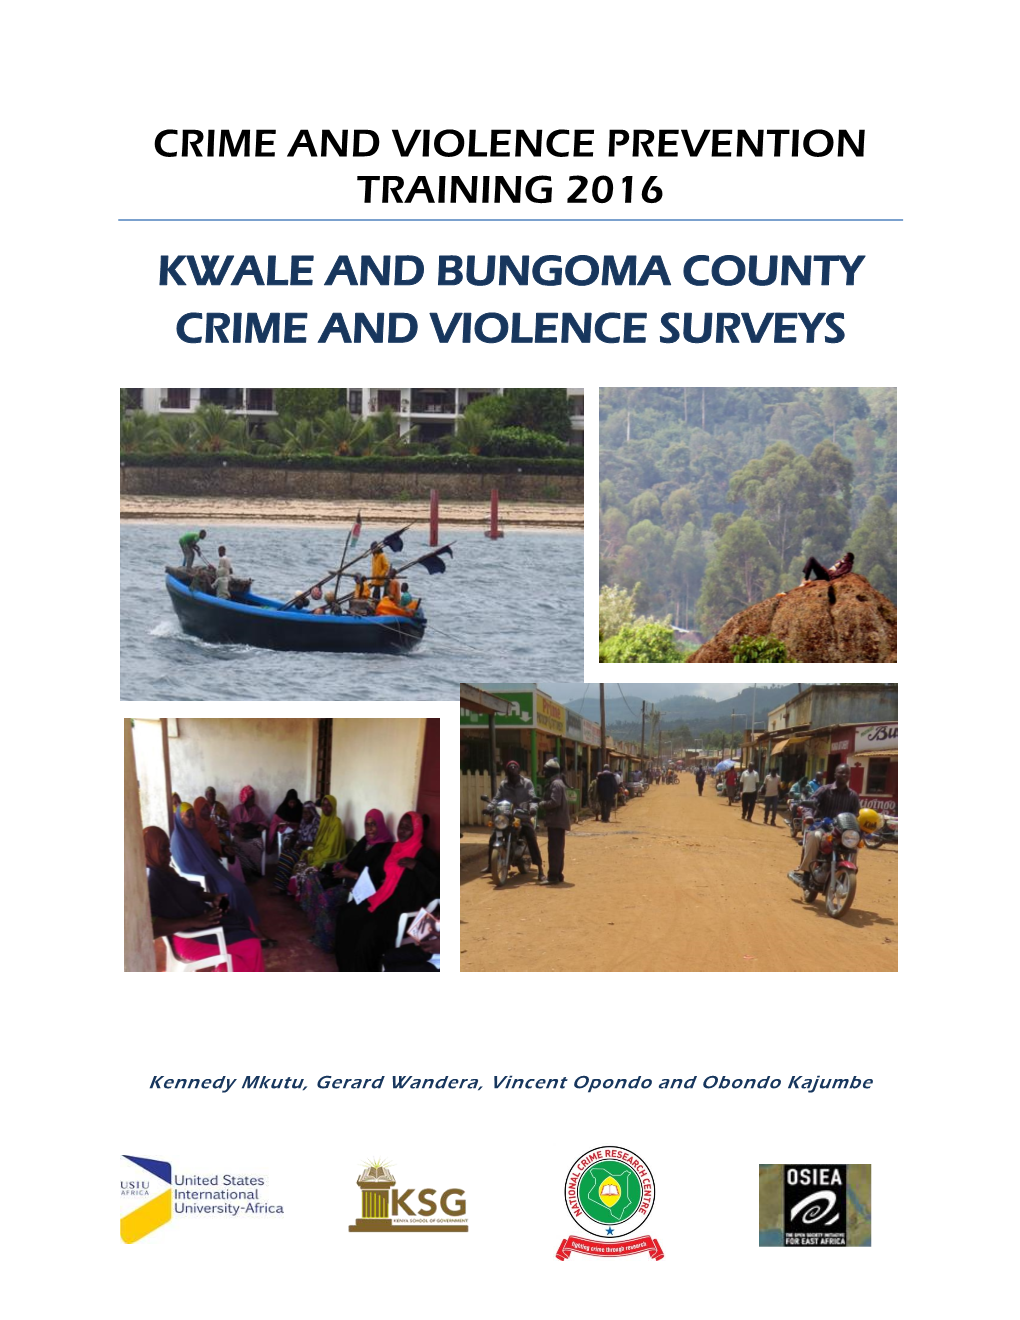 Kwale and Bungoma County Crime and Violence Surveys